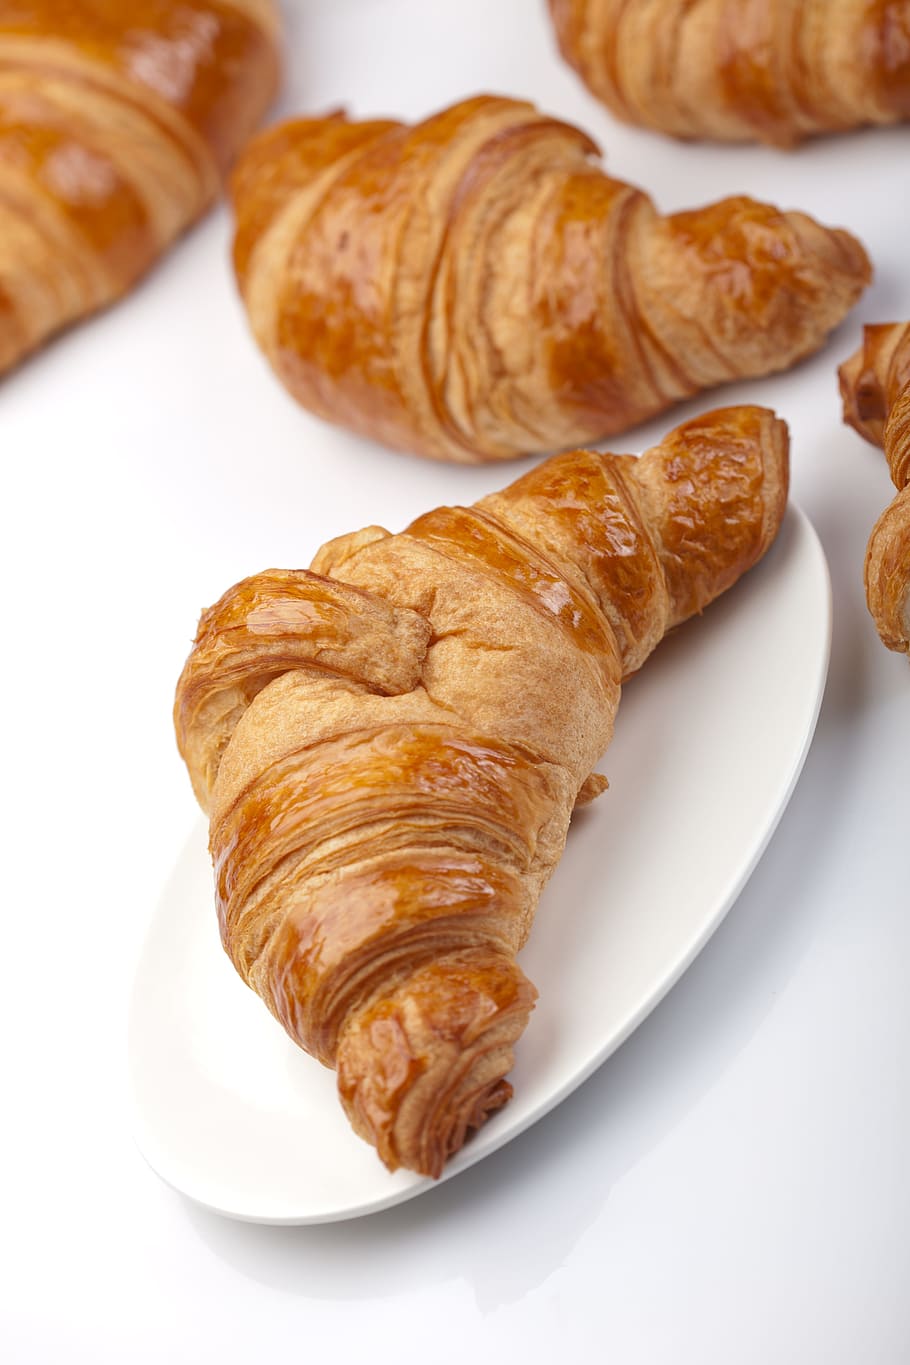 HD wallpaper: Croissant, Croissants, Baking, Breakfast, nutrition, muffin